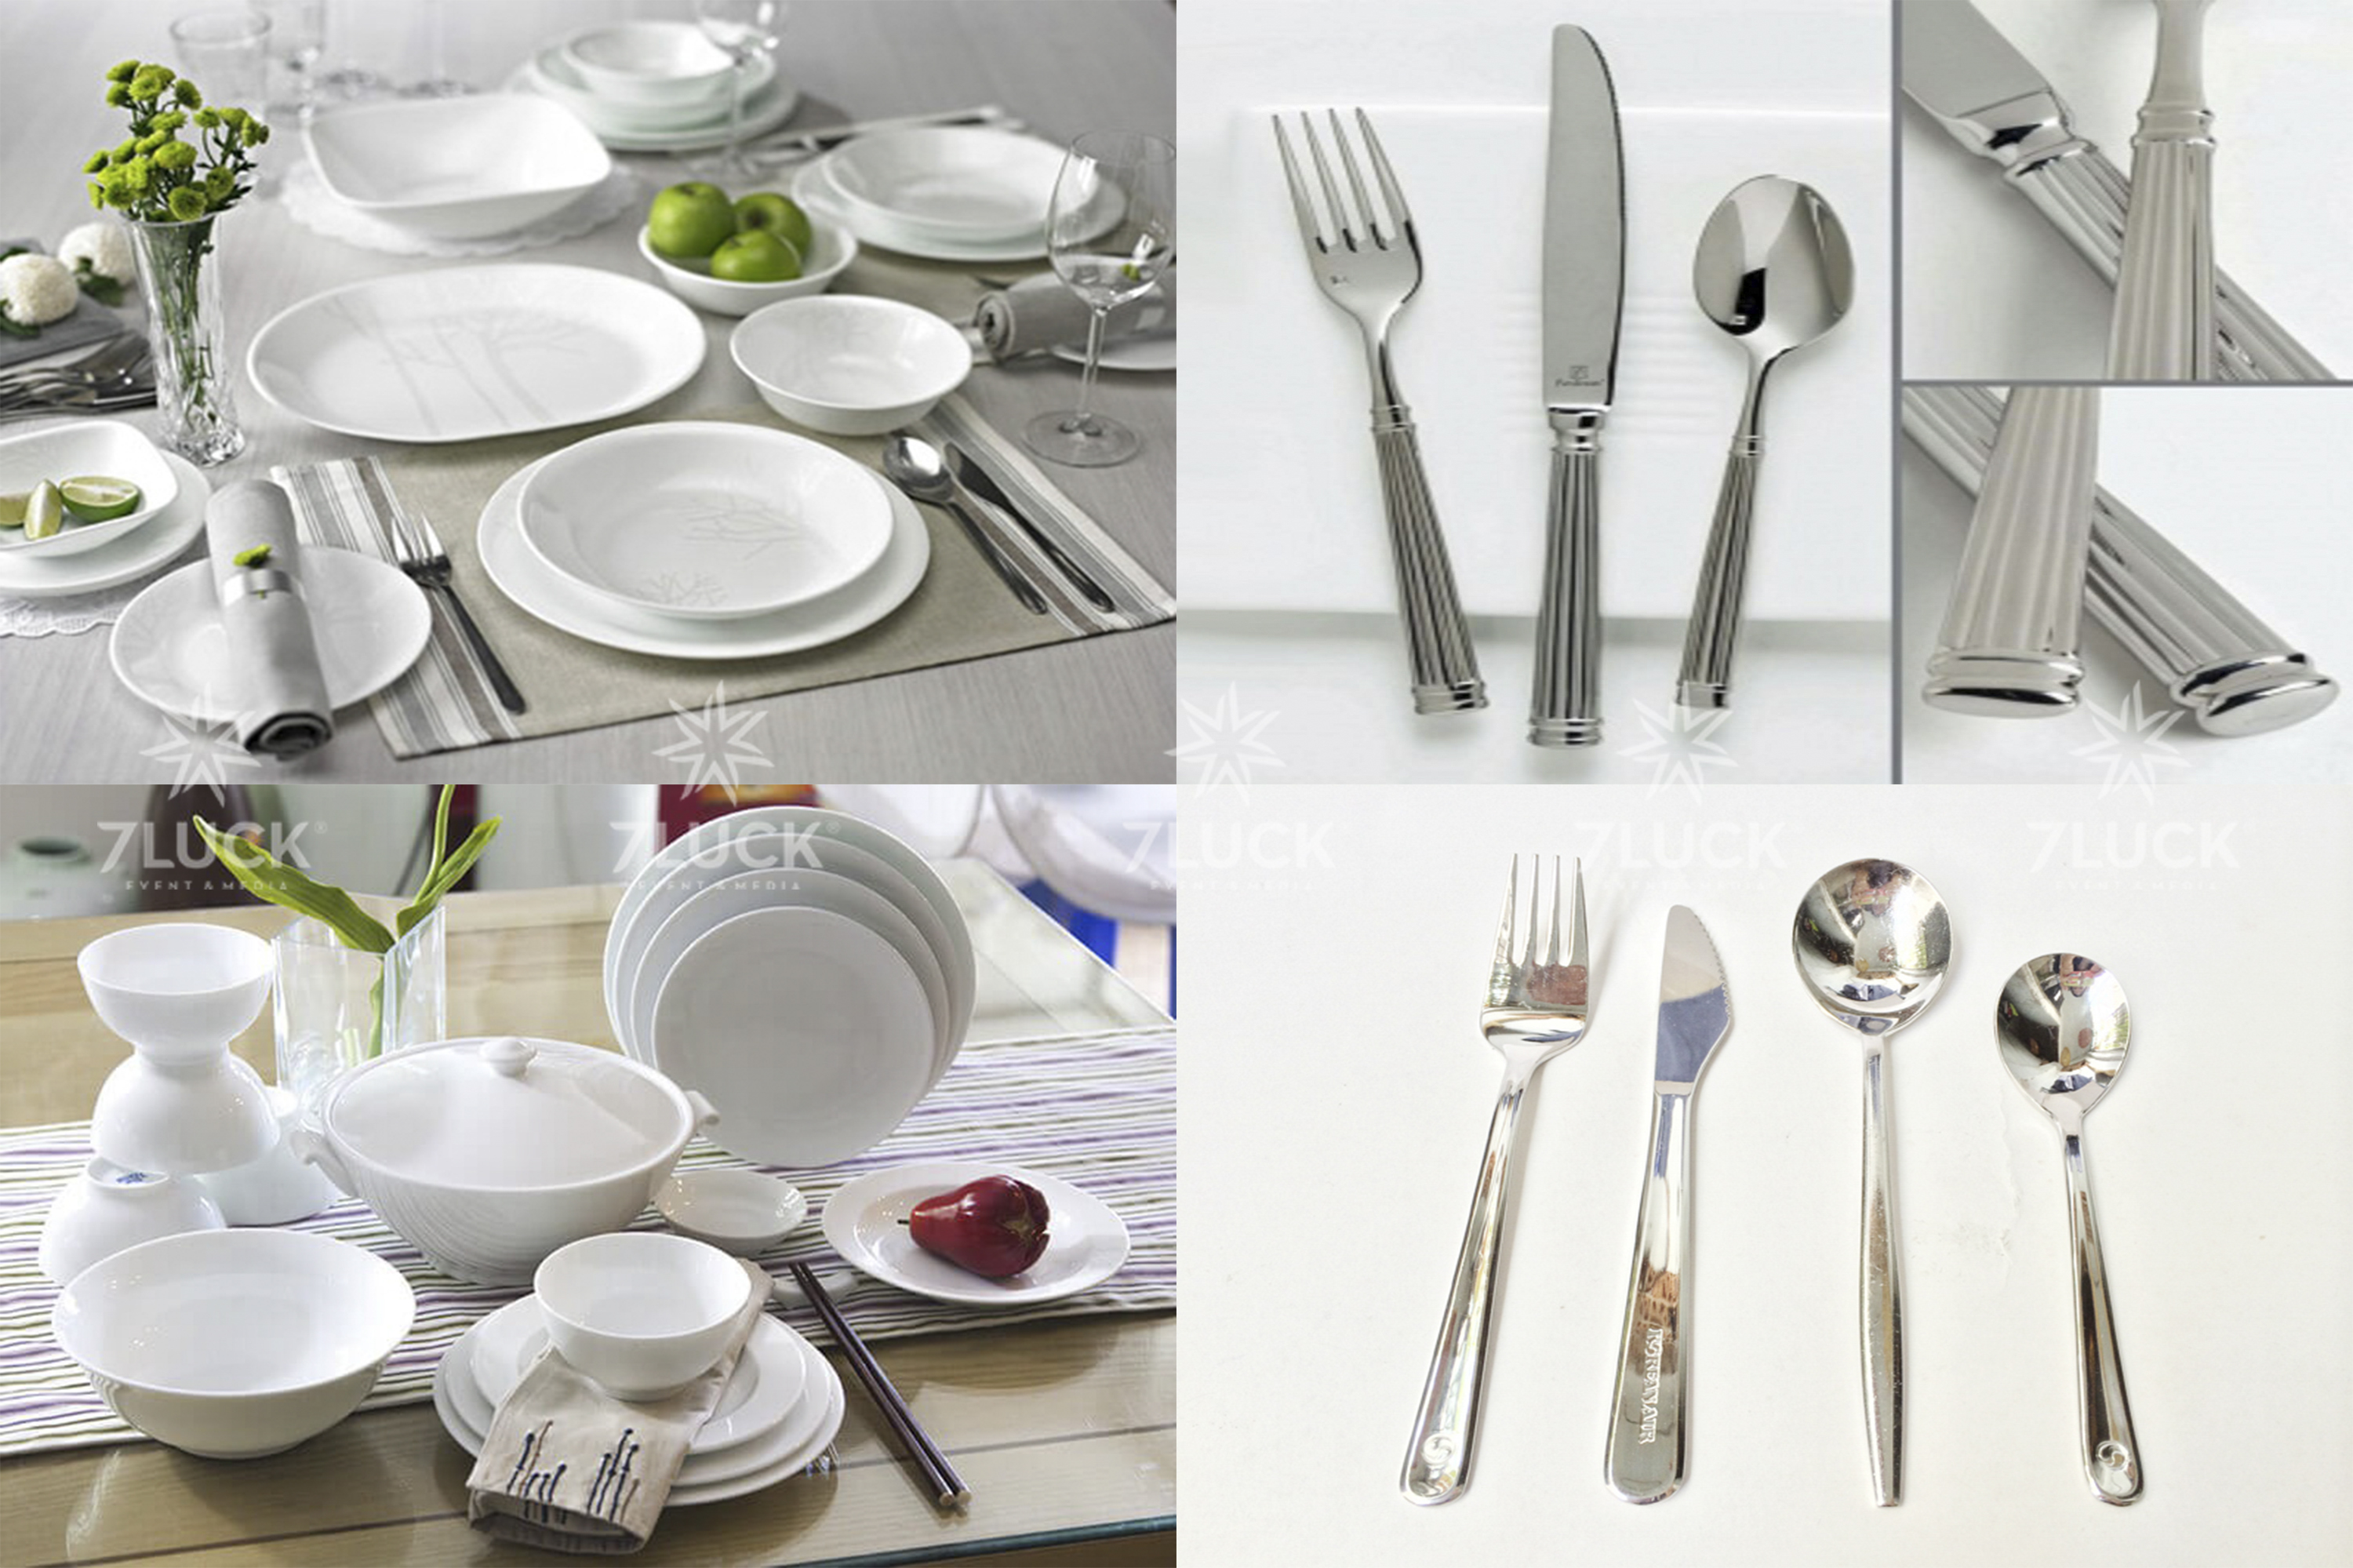 Bowls, plates, spoons, forks, glasses